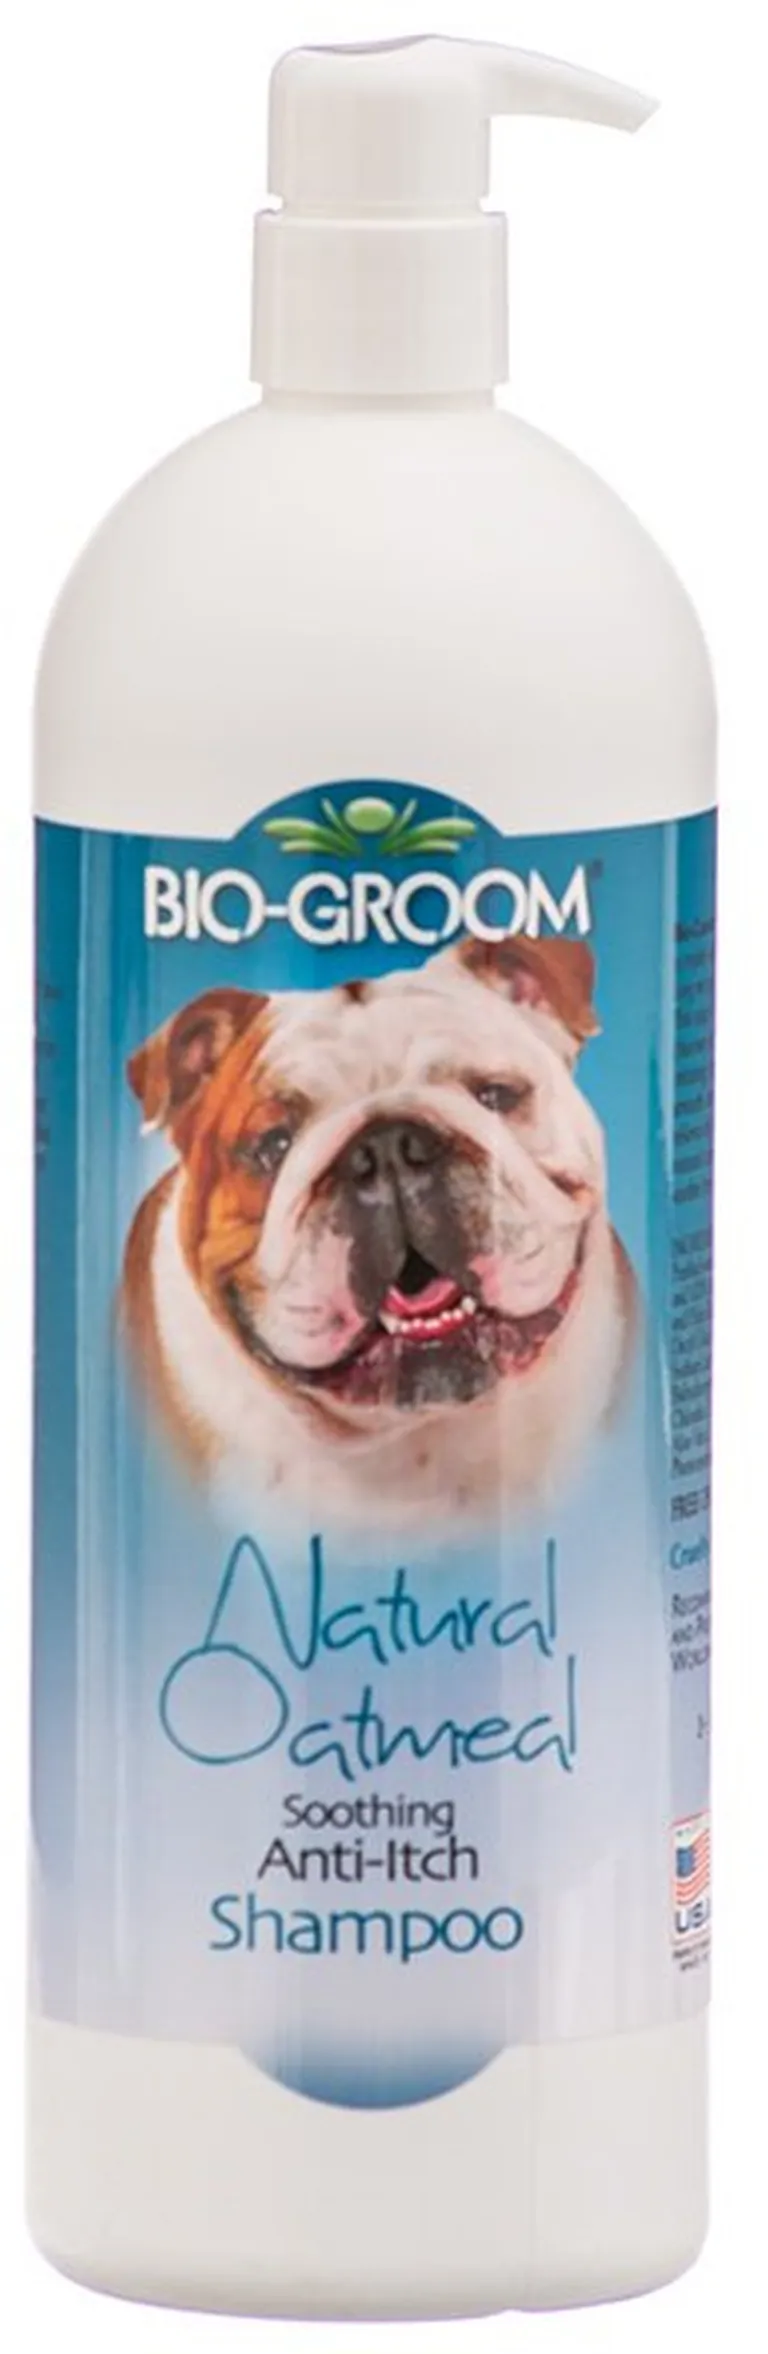 Bio Groom Natural Oatmeal Soothing Anti-Itch Shampoo Photo 2